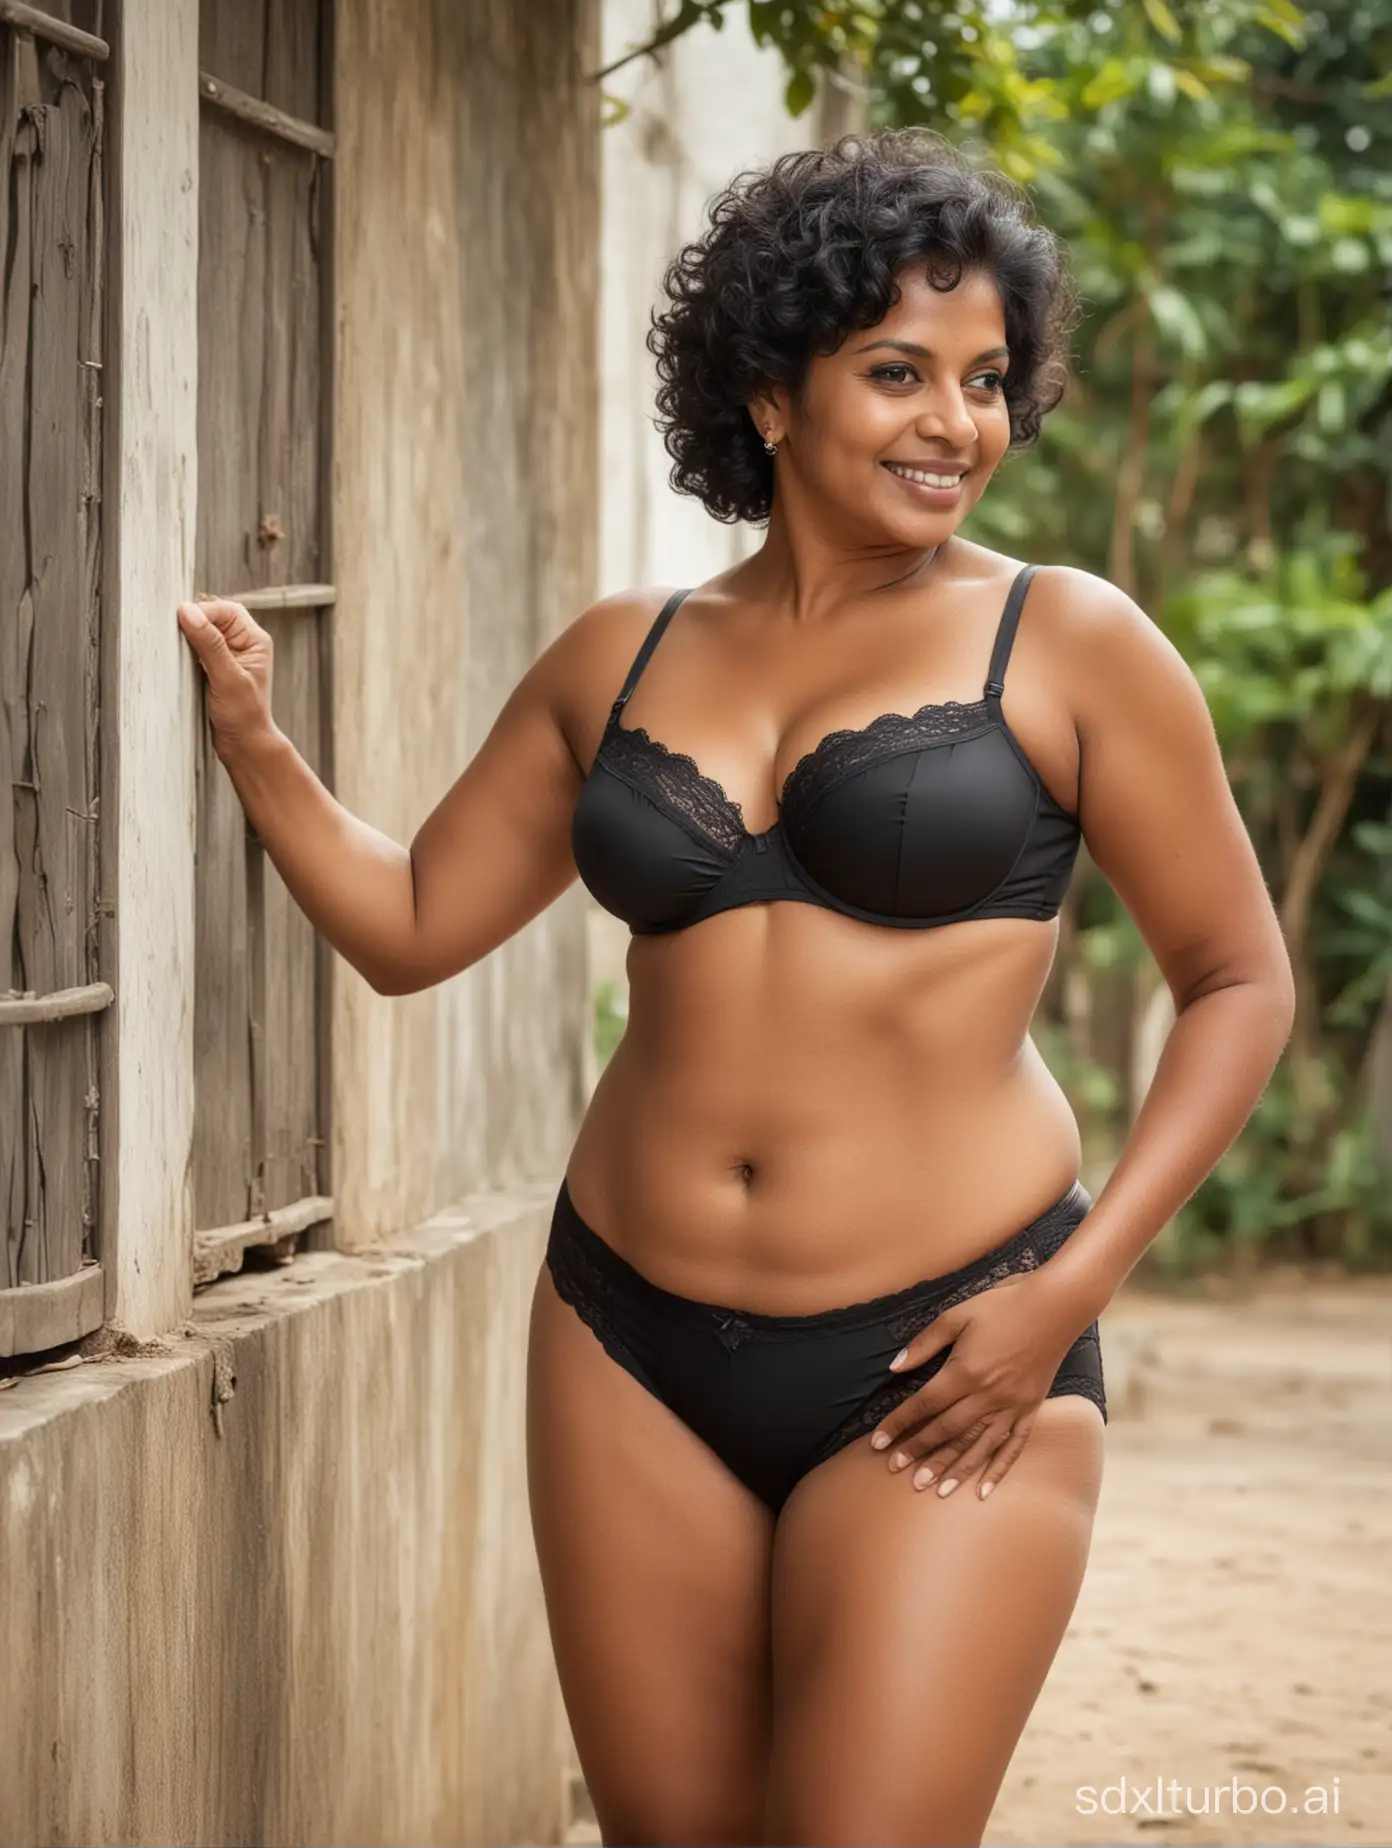 Elegant-Sri-Lankan-Woman-Joyful-Outdoor-Photoshoot-in-Instagram-Style